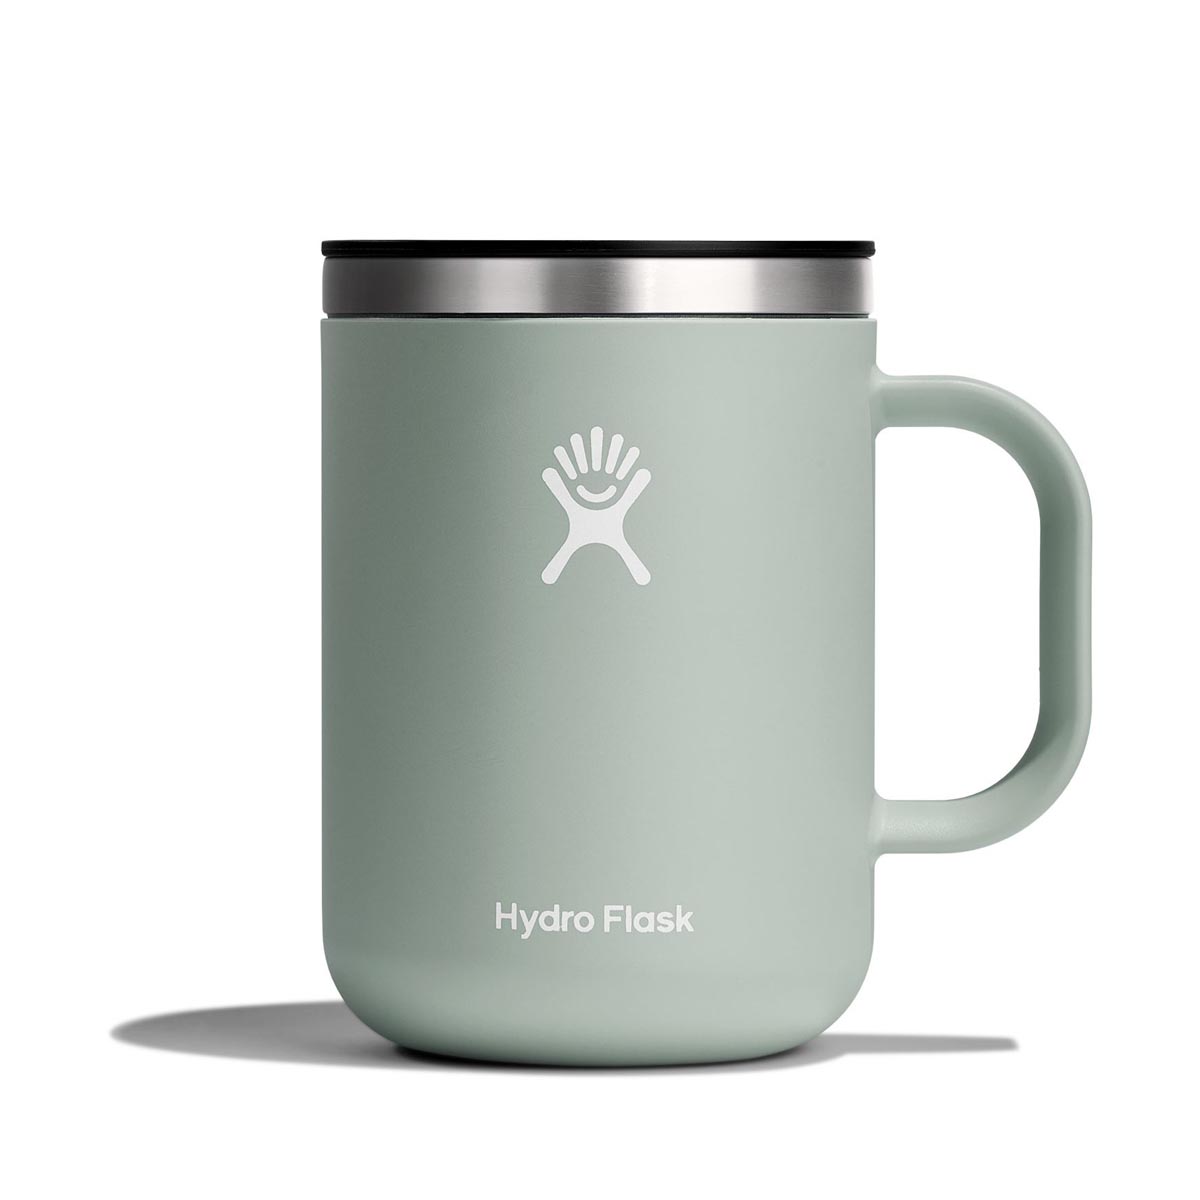 Hydro Flask Stainless Steel Coffee Mug Vacuum Insulated Black, 12 Ounces